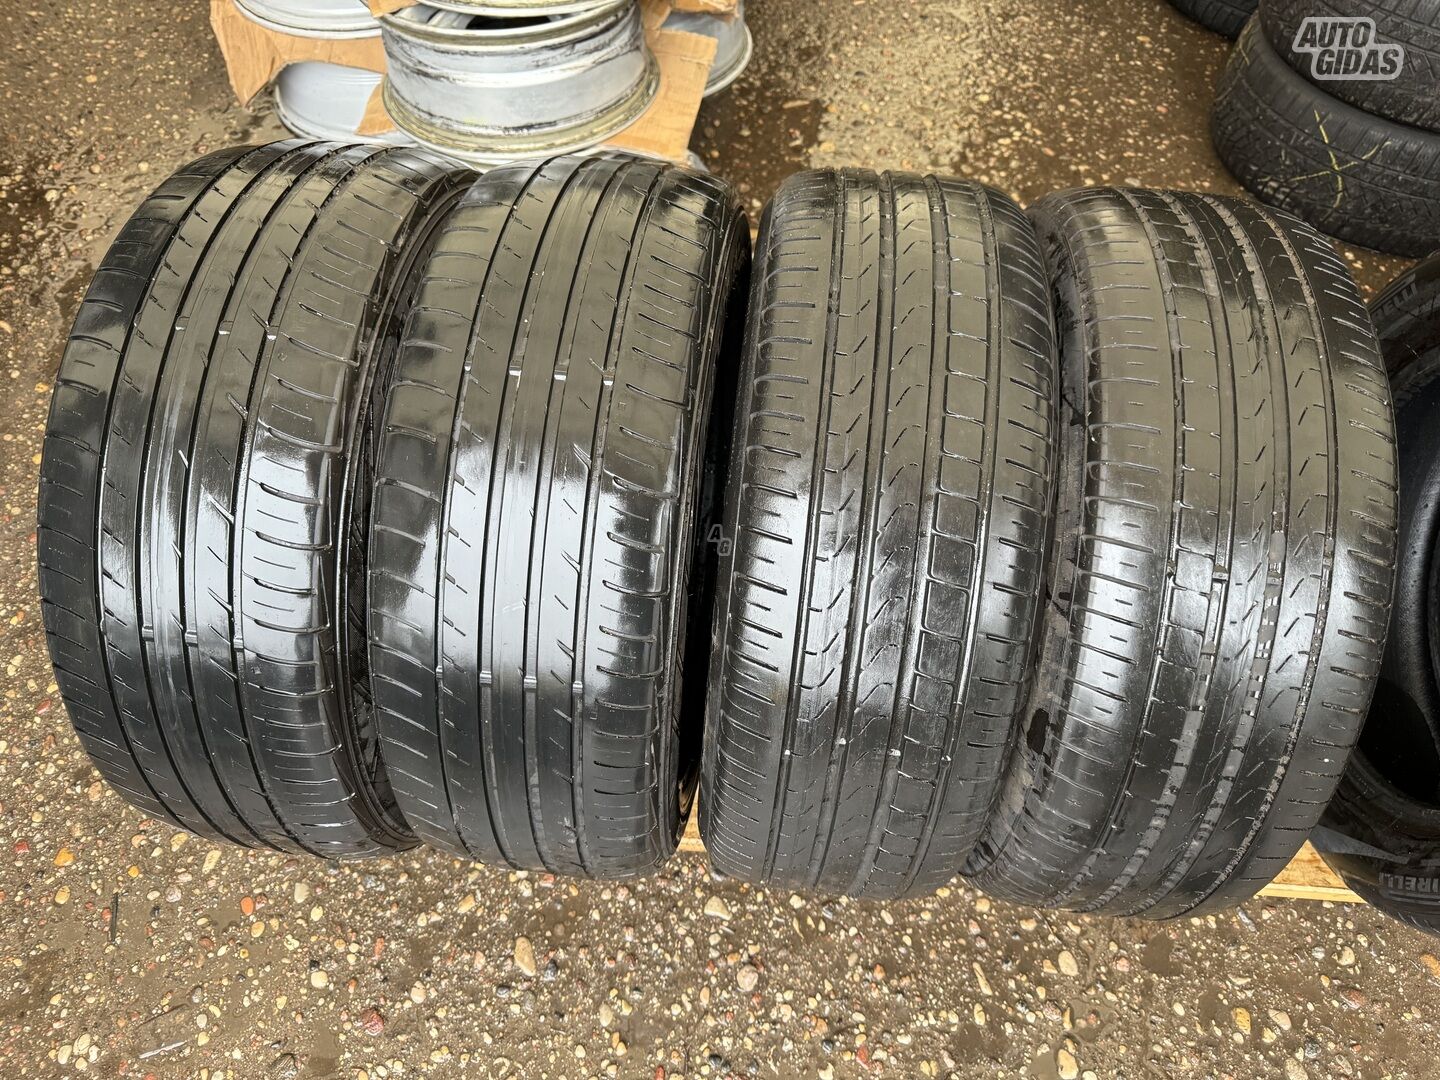 Pirelli Siunciam, 4-5mm R17 summer tyres passanger car